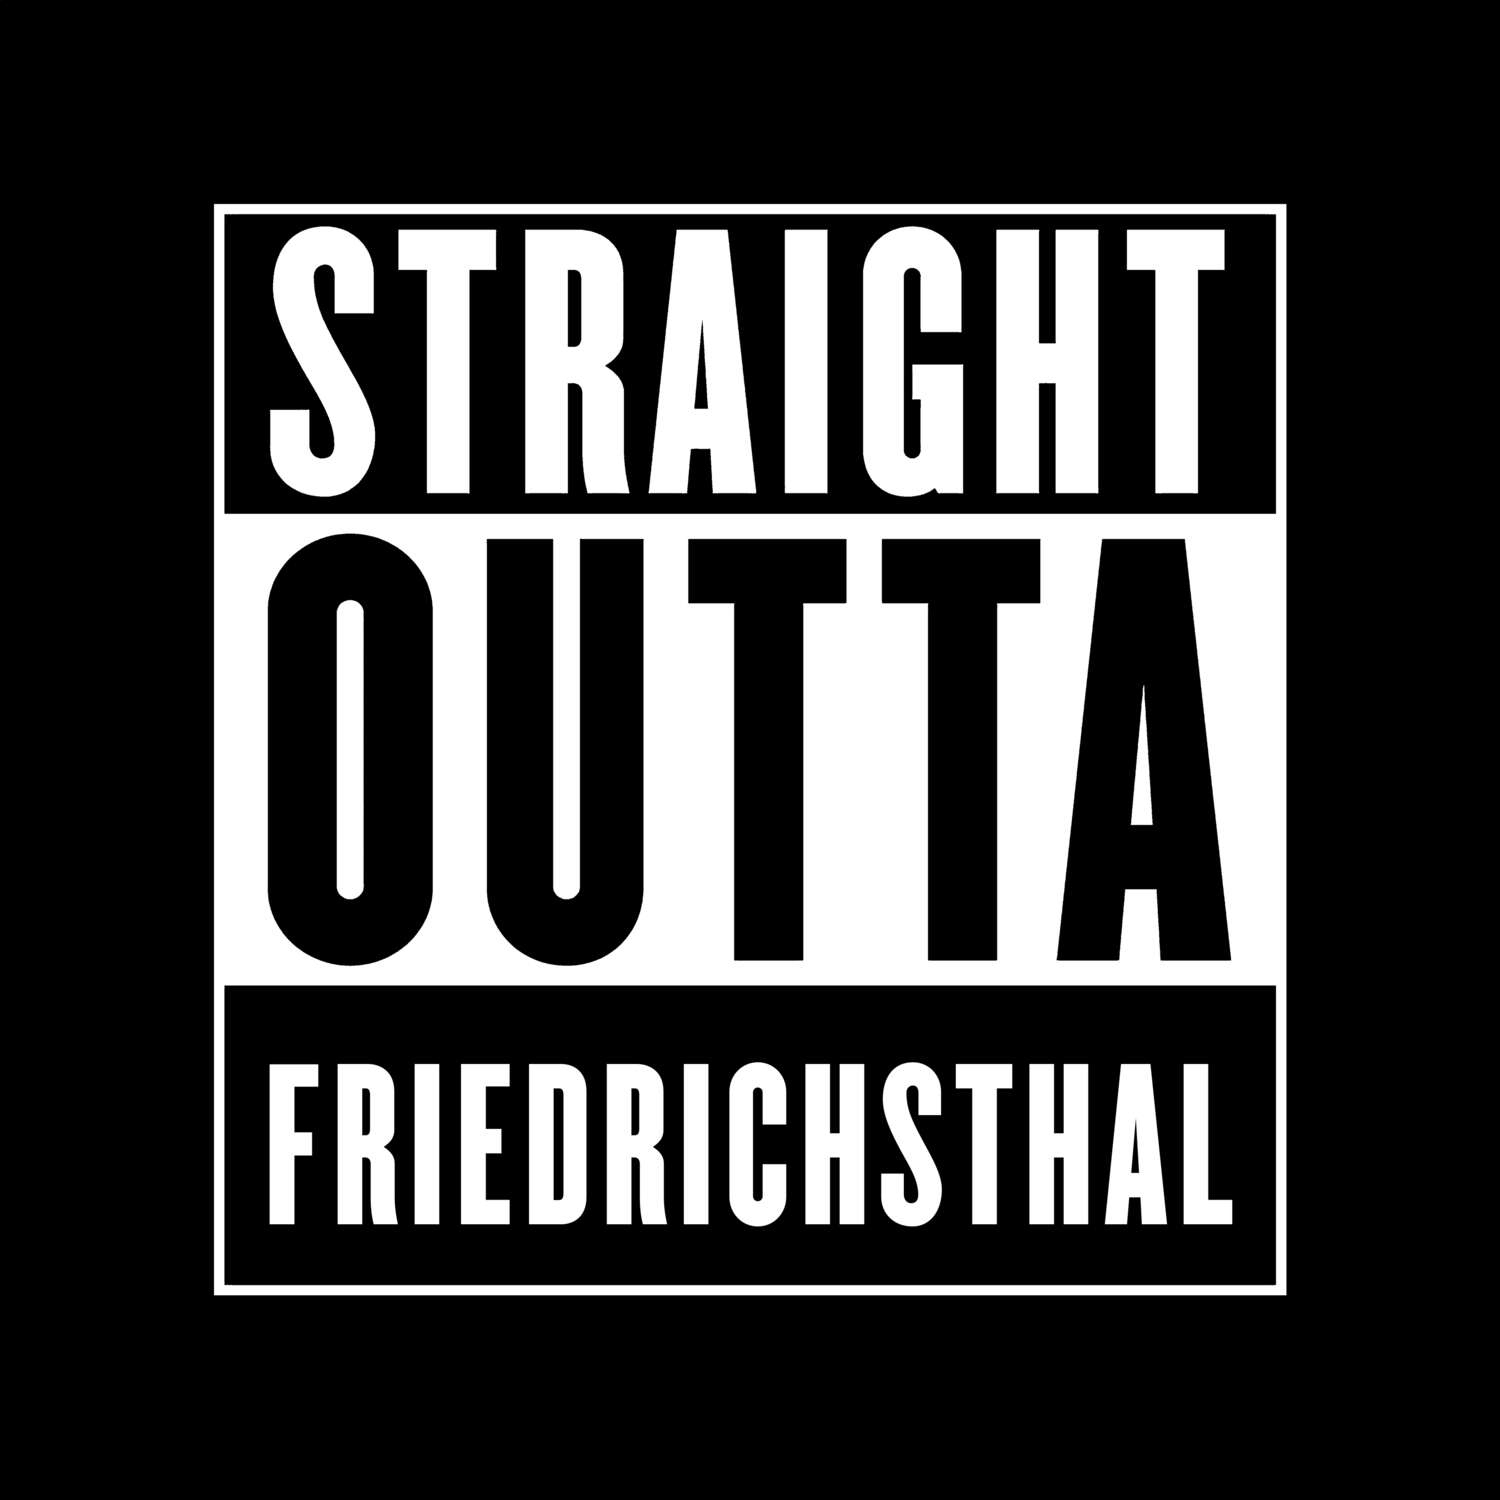 Friedrichsthal T-Shirt »Straight Outta«